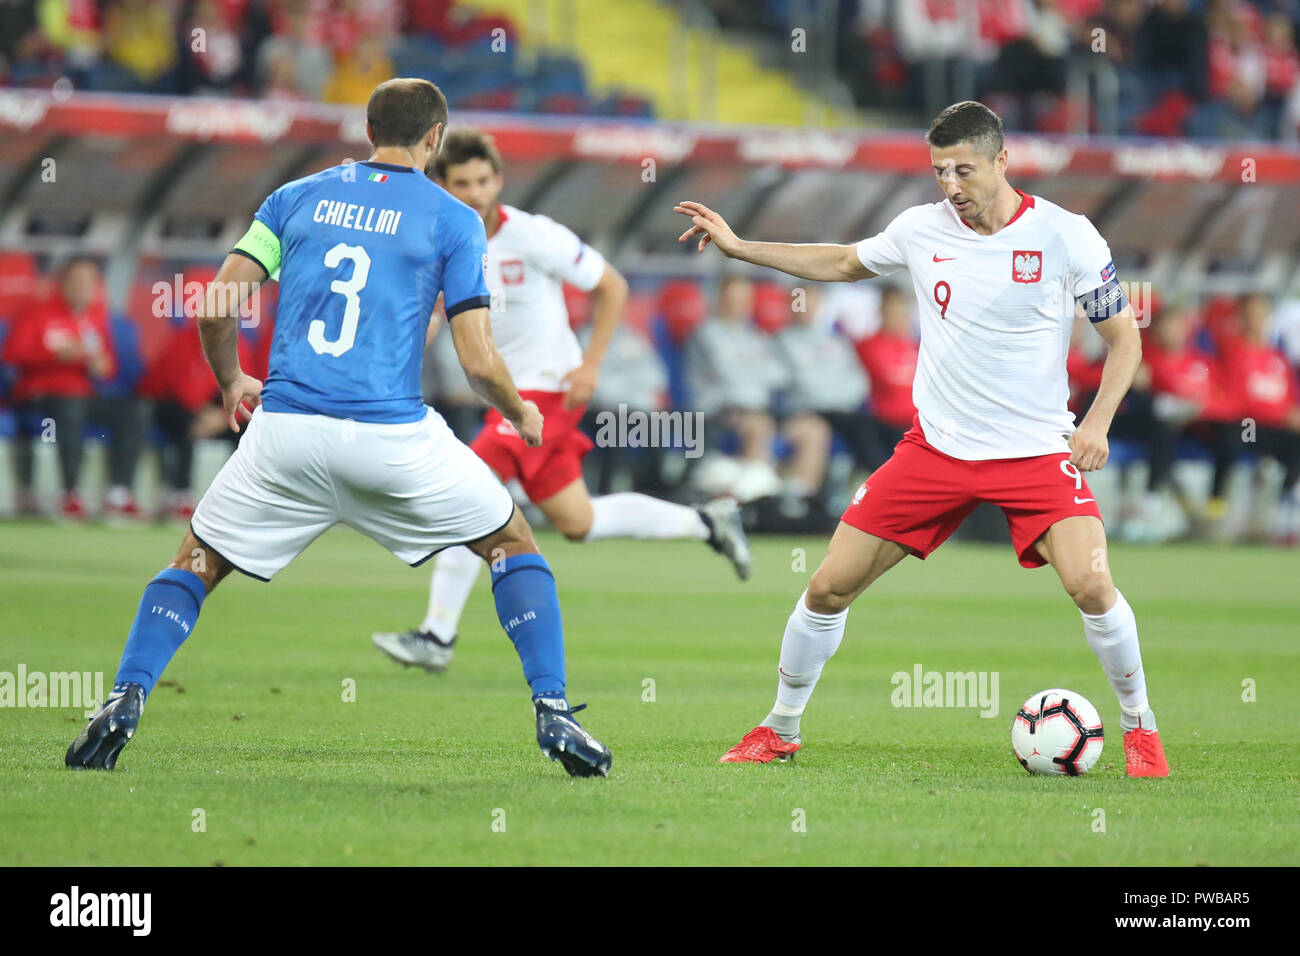 Chorzow, Poland. 11th Oct 2018. UEFA Nations League 2019: Poland - Portugal  o/p Robert Lewandowski Credit: Marcin Kadziolka/Alamy Live News Stock Photo  - Alamy